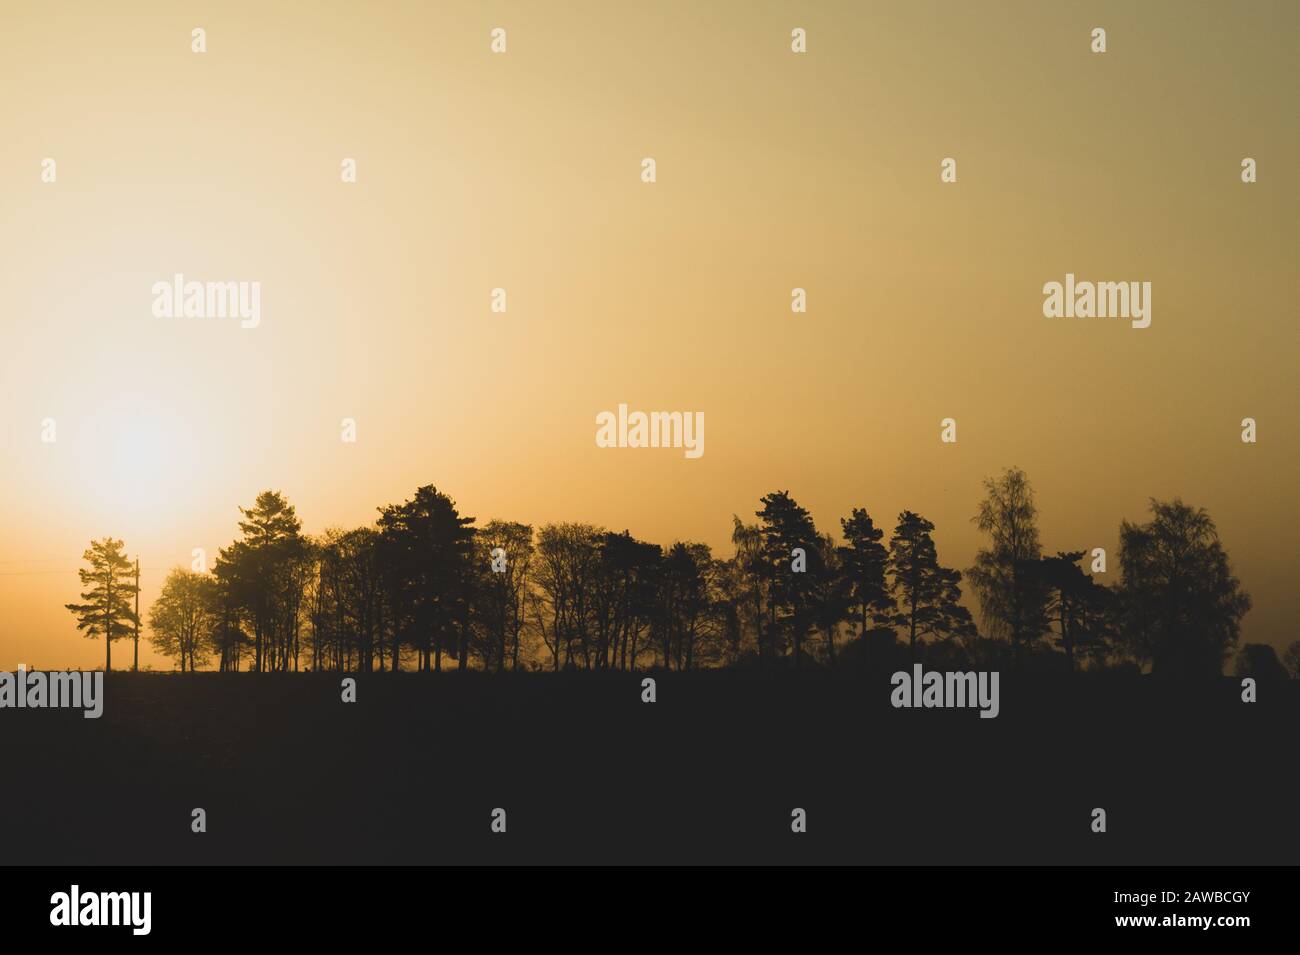 Silhouette der Bäume bei Sonnenuntergang, Sonne hinter dem Wald, Abendlandschaft Stockfoto